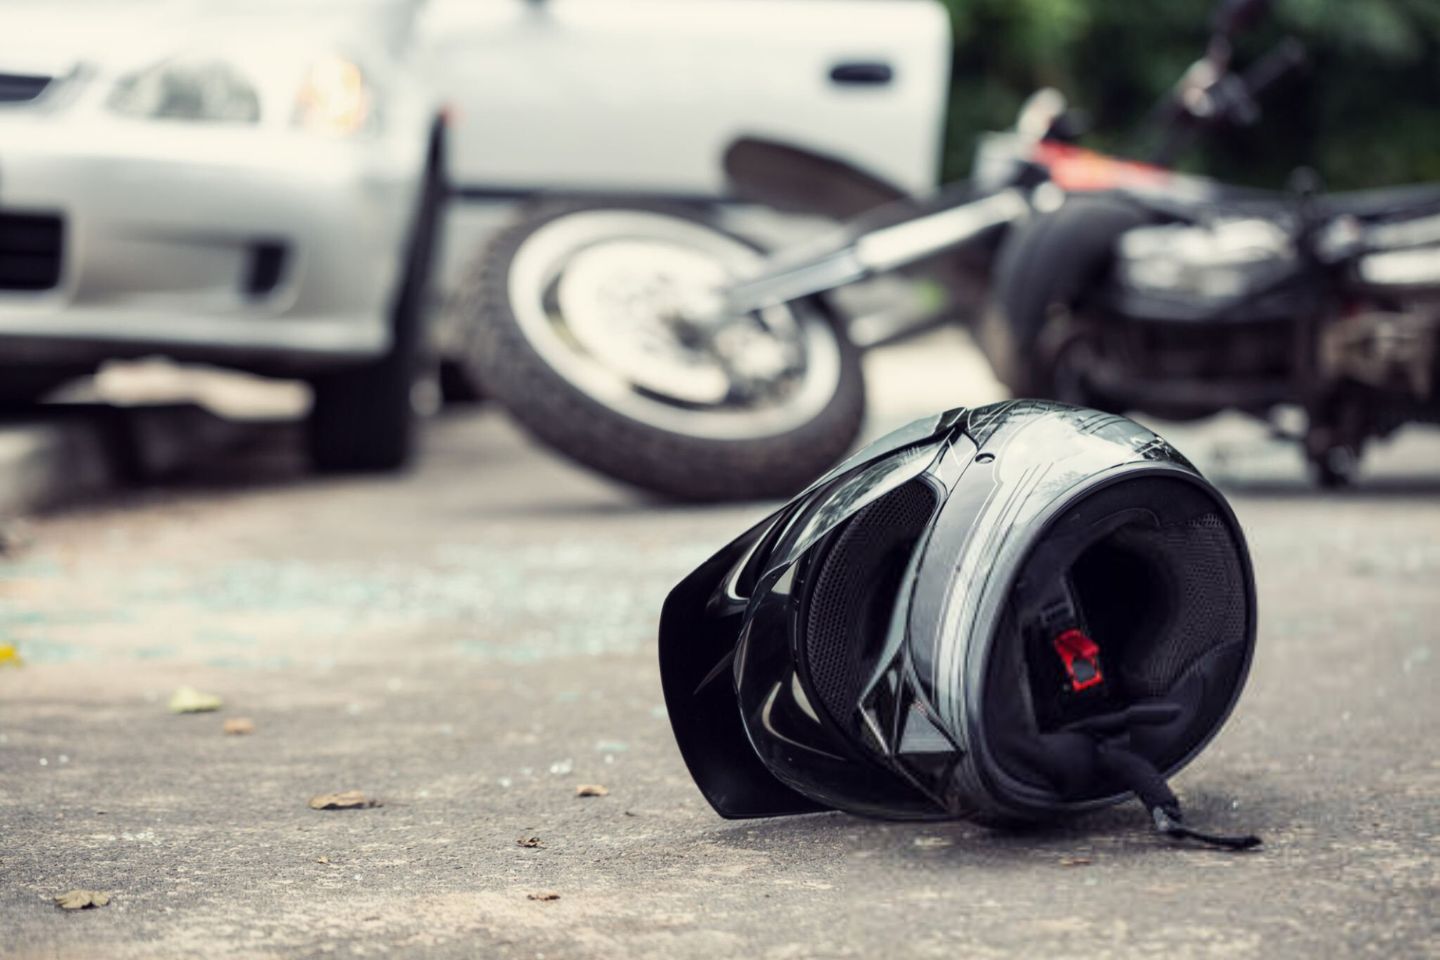 Important Cases of Santa Clarita Motorcycle Deaths